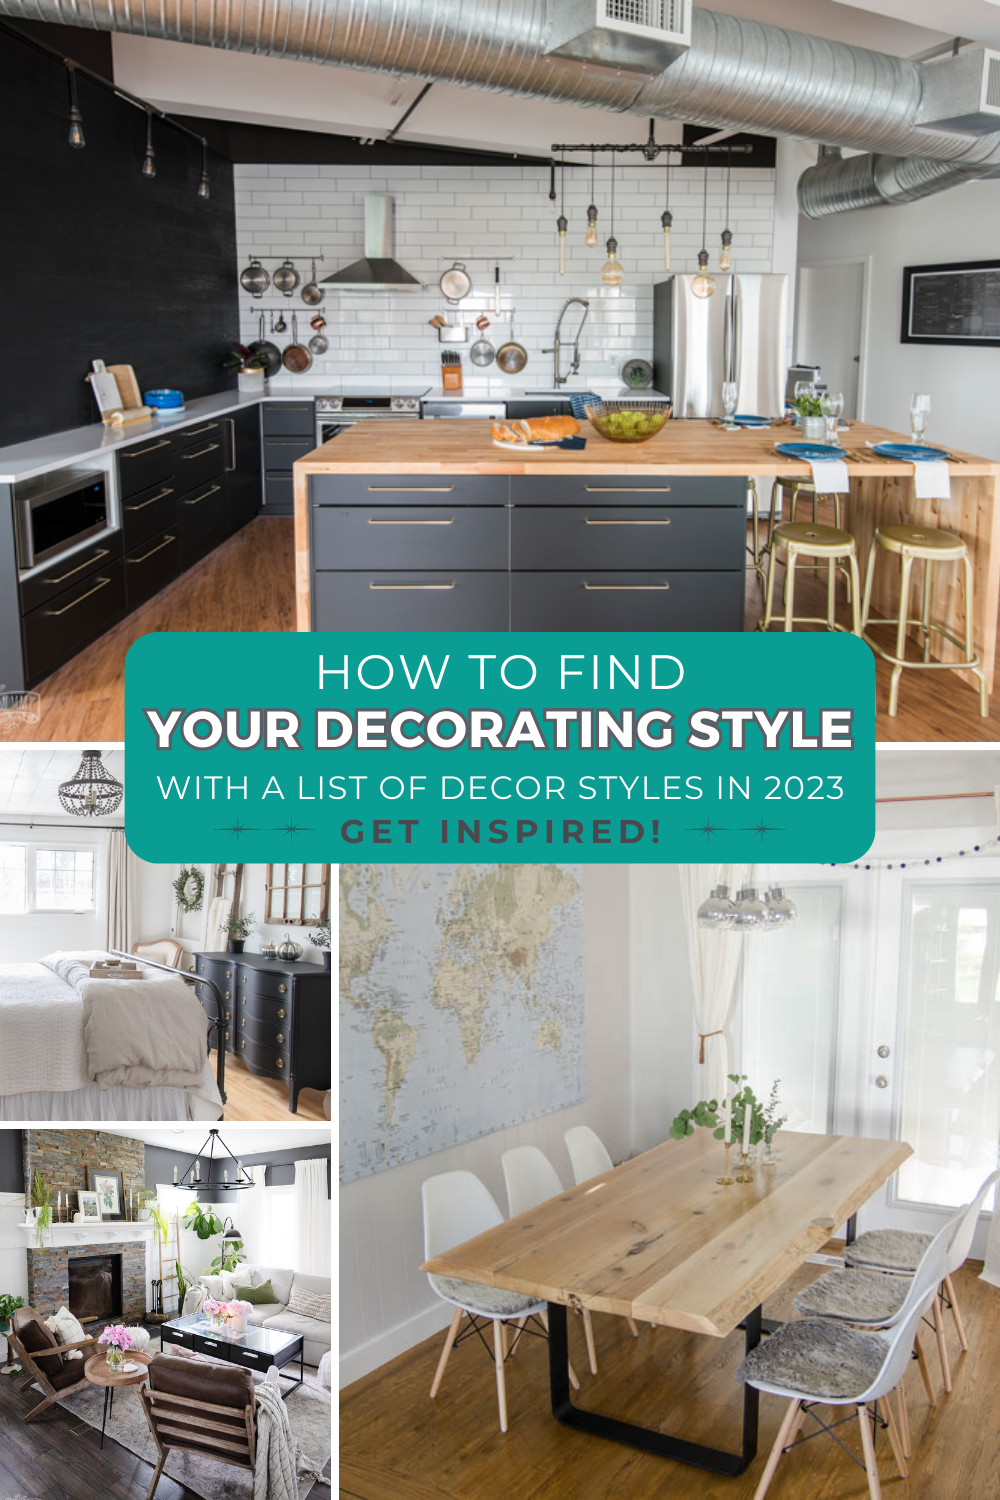 I'm an interior design expert – 14 easy ways to make your home